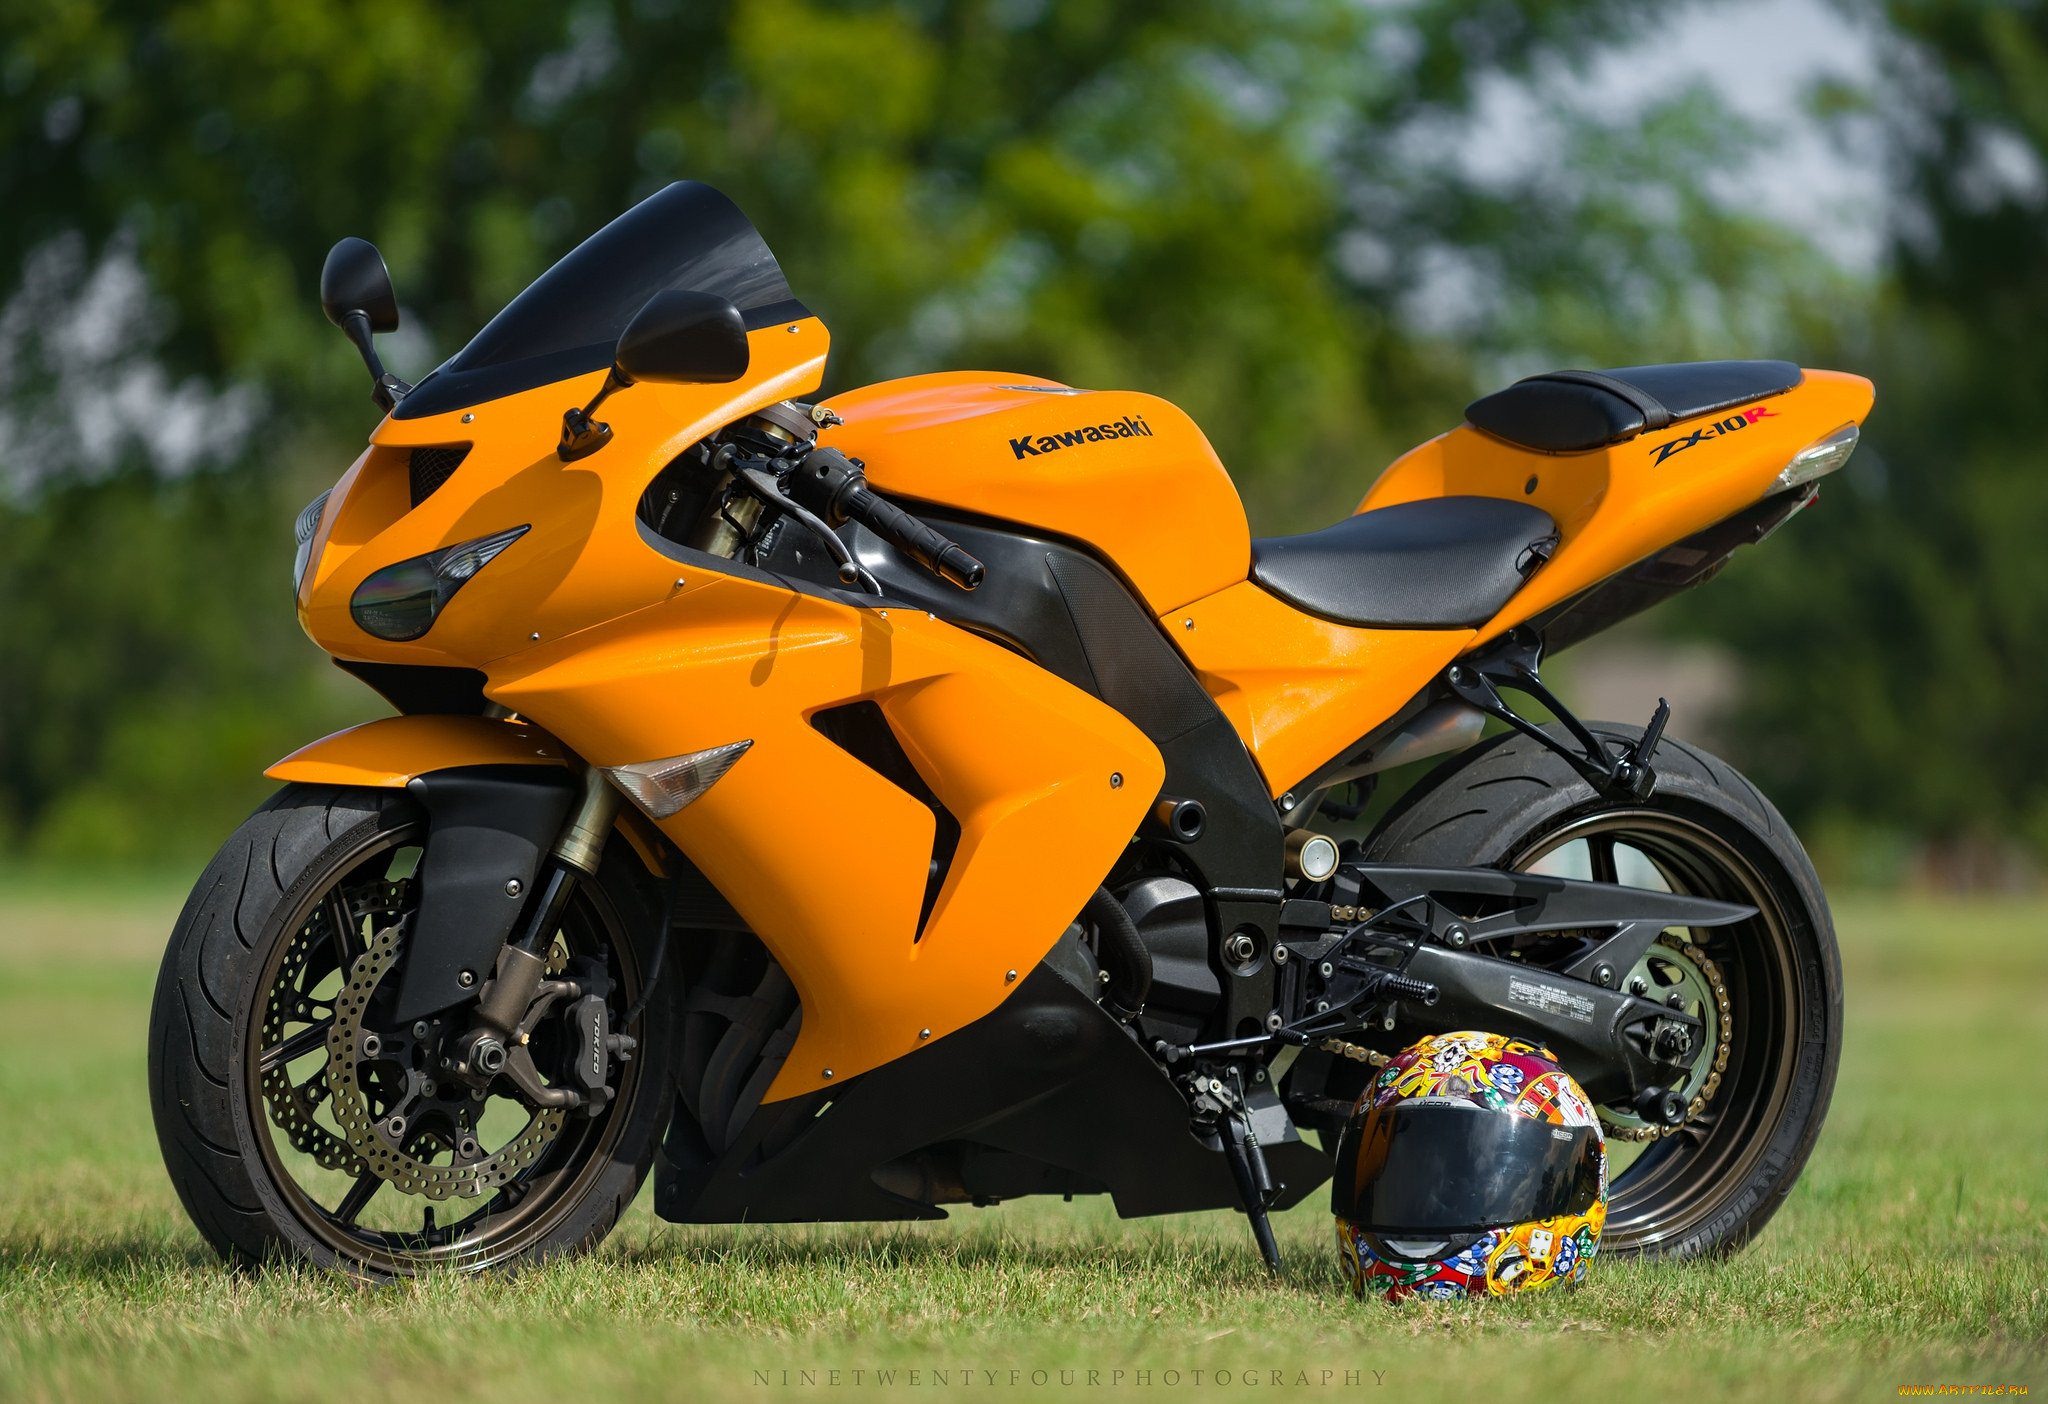 Бесплатный мотоцикл. Спортивный мотоцикл Кавасаки. Кавасаки оранжевый. Kawasaki оранжевый. Спортбайк Кавасаки оранжевый.